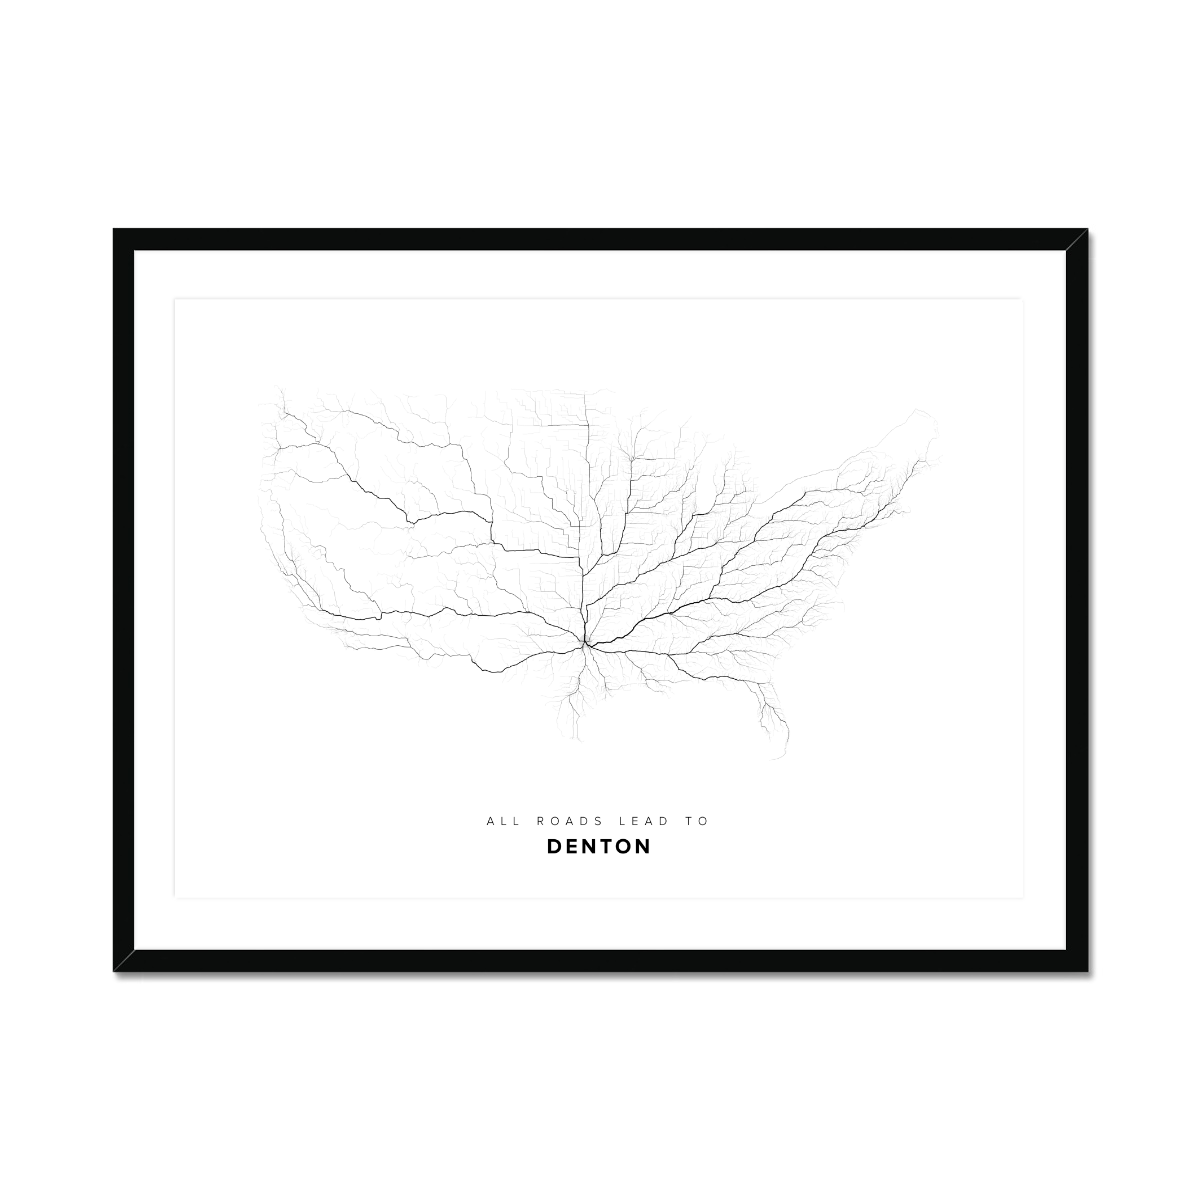 All roads lead to Denton (United States of America) Fine Art Map Print